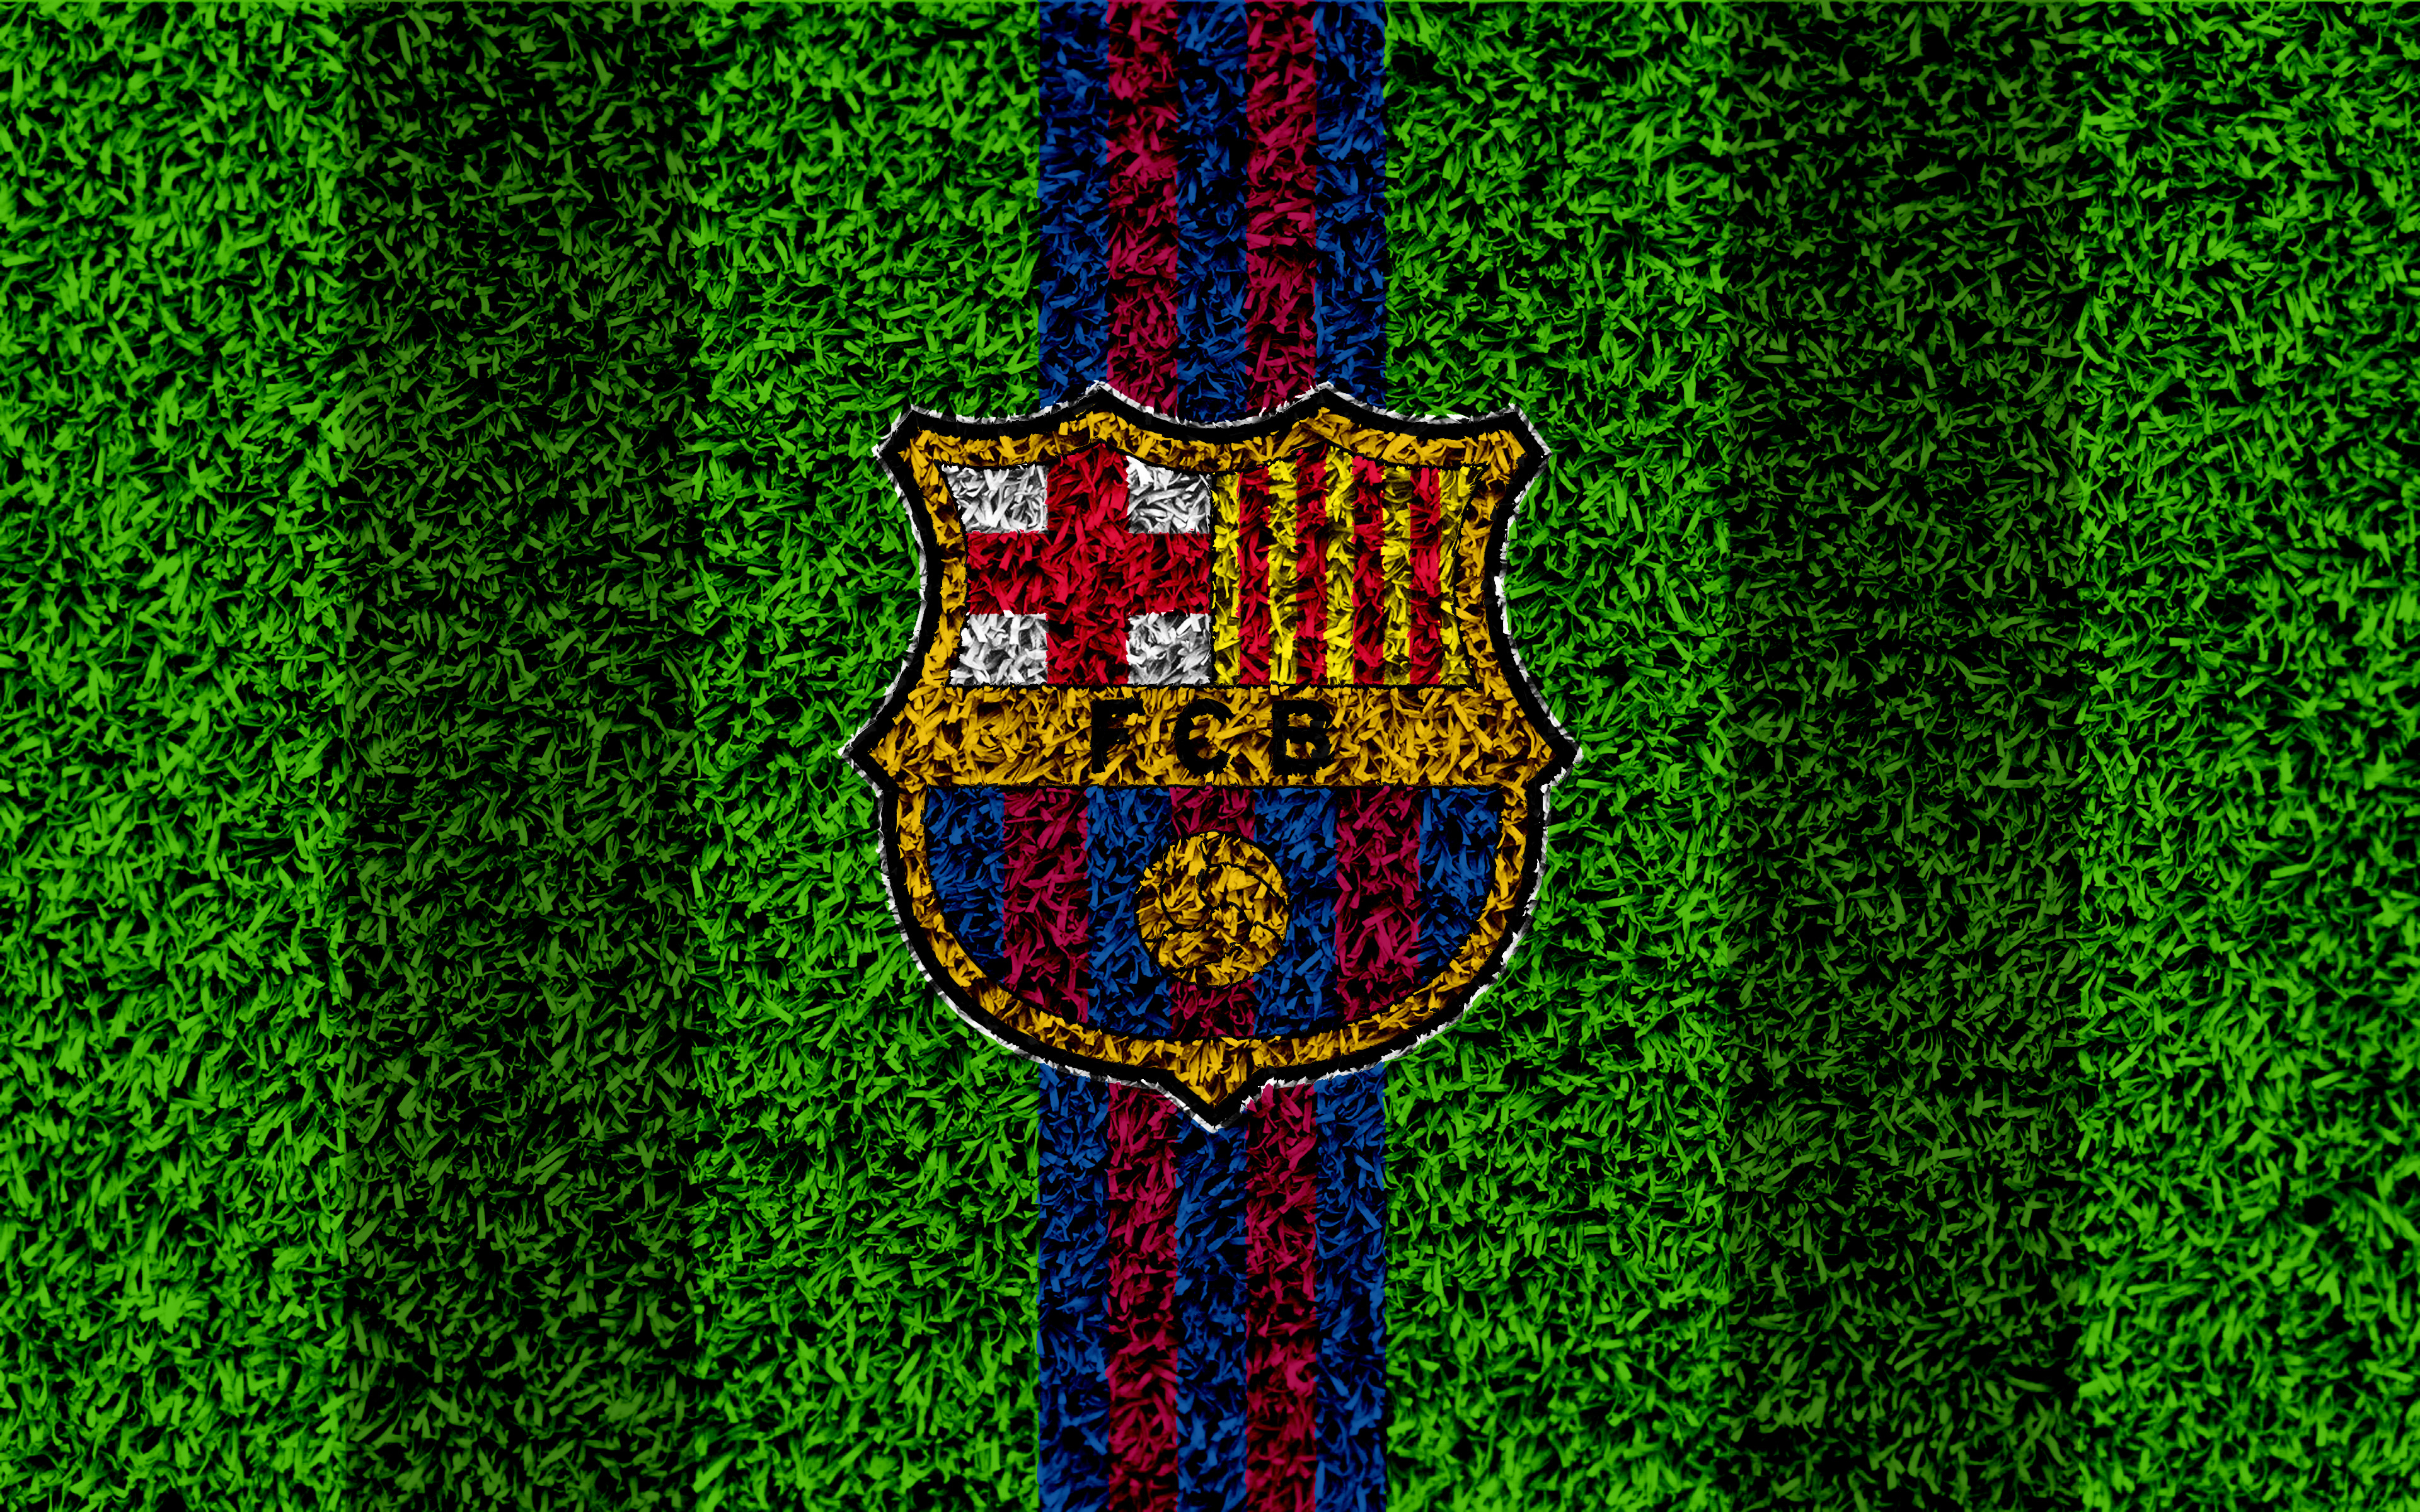 Descarga gratuita de fondo de pantalla para móvil de Fútbol, Logo, Deporte, Fc Barcelona.